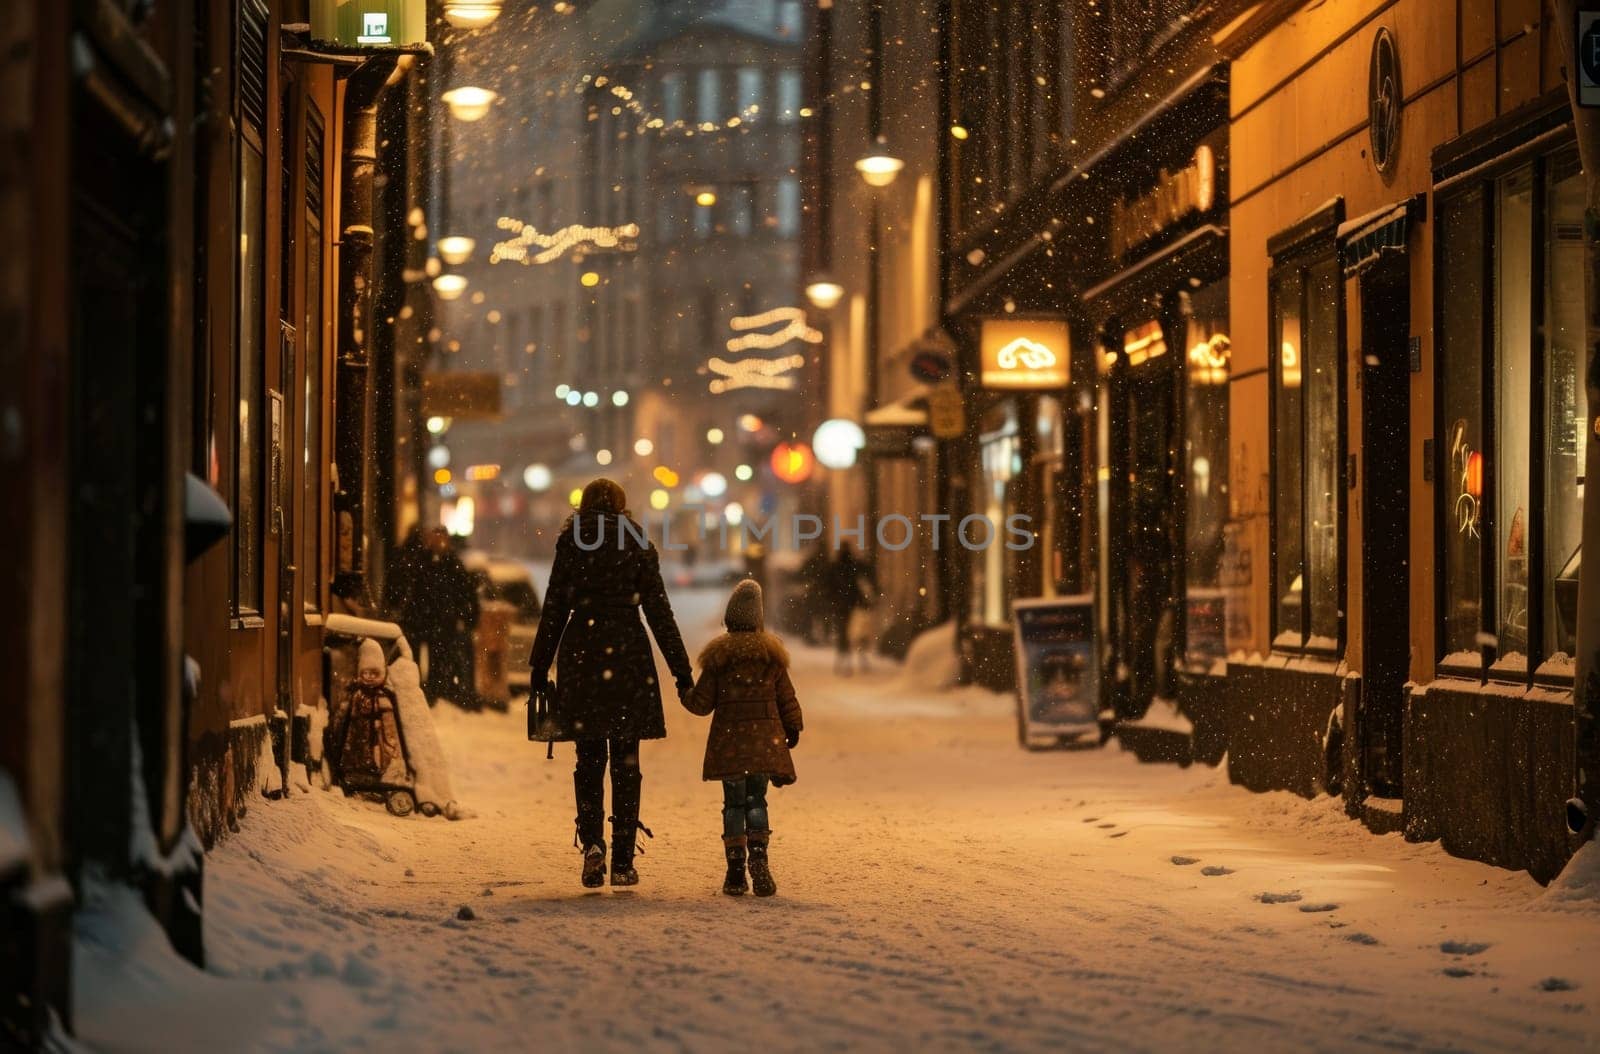 Winter evening stroll city by gcm